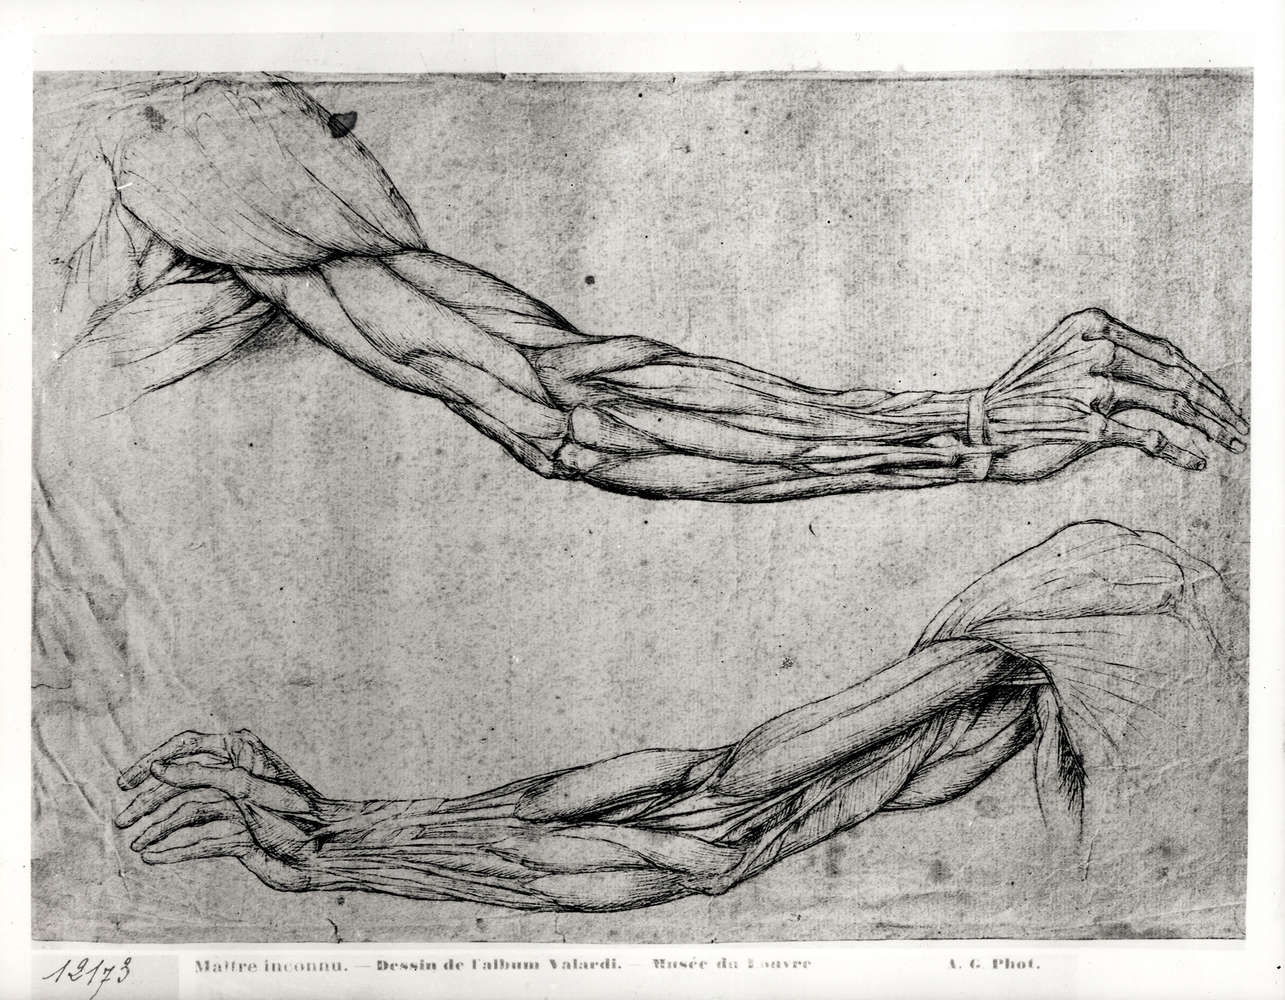             Photo wallpaper "Study of weapons" by Leonardo da Vinci
        